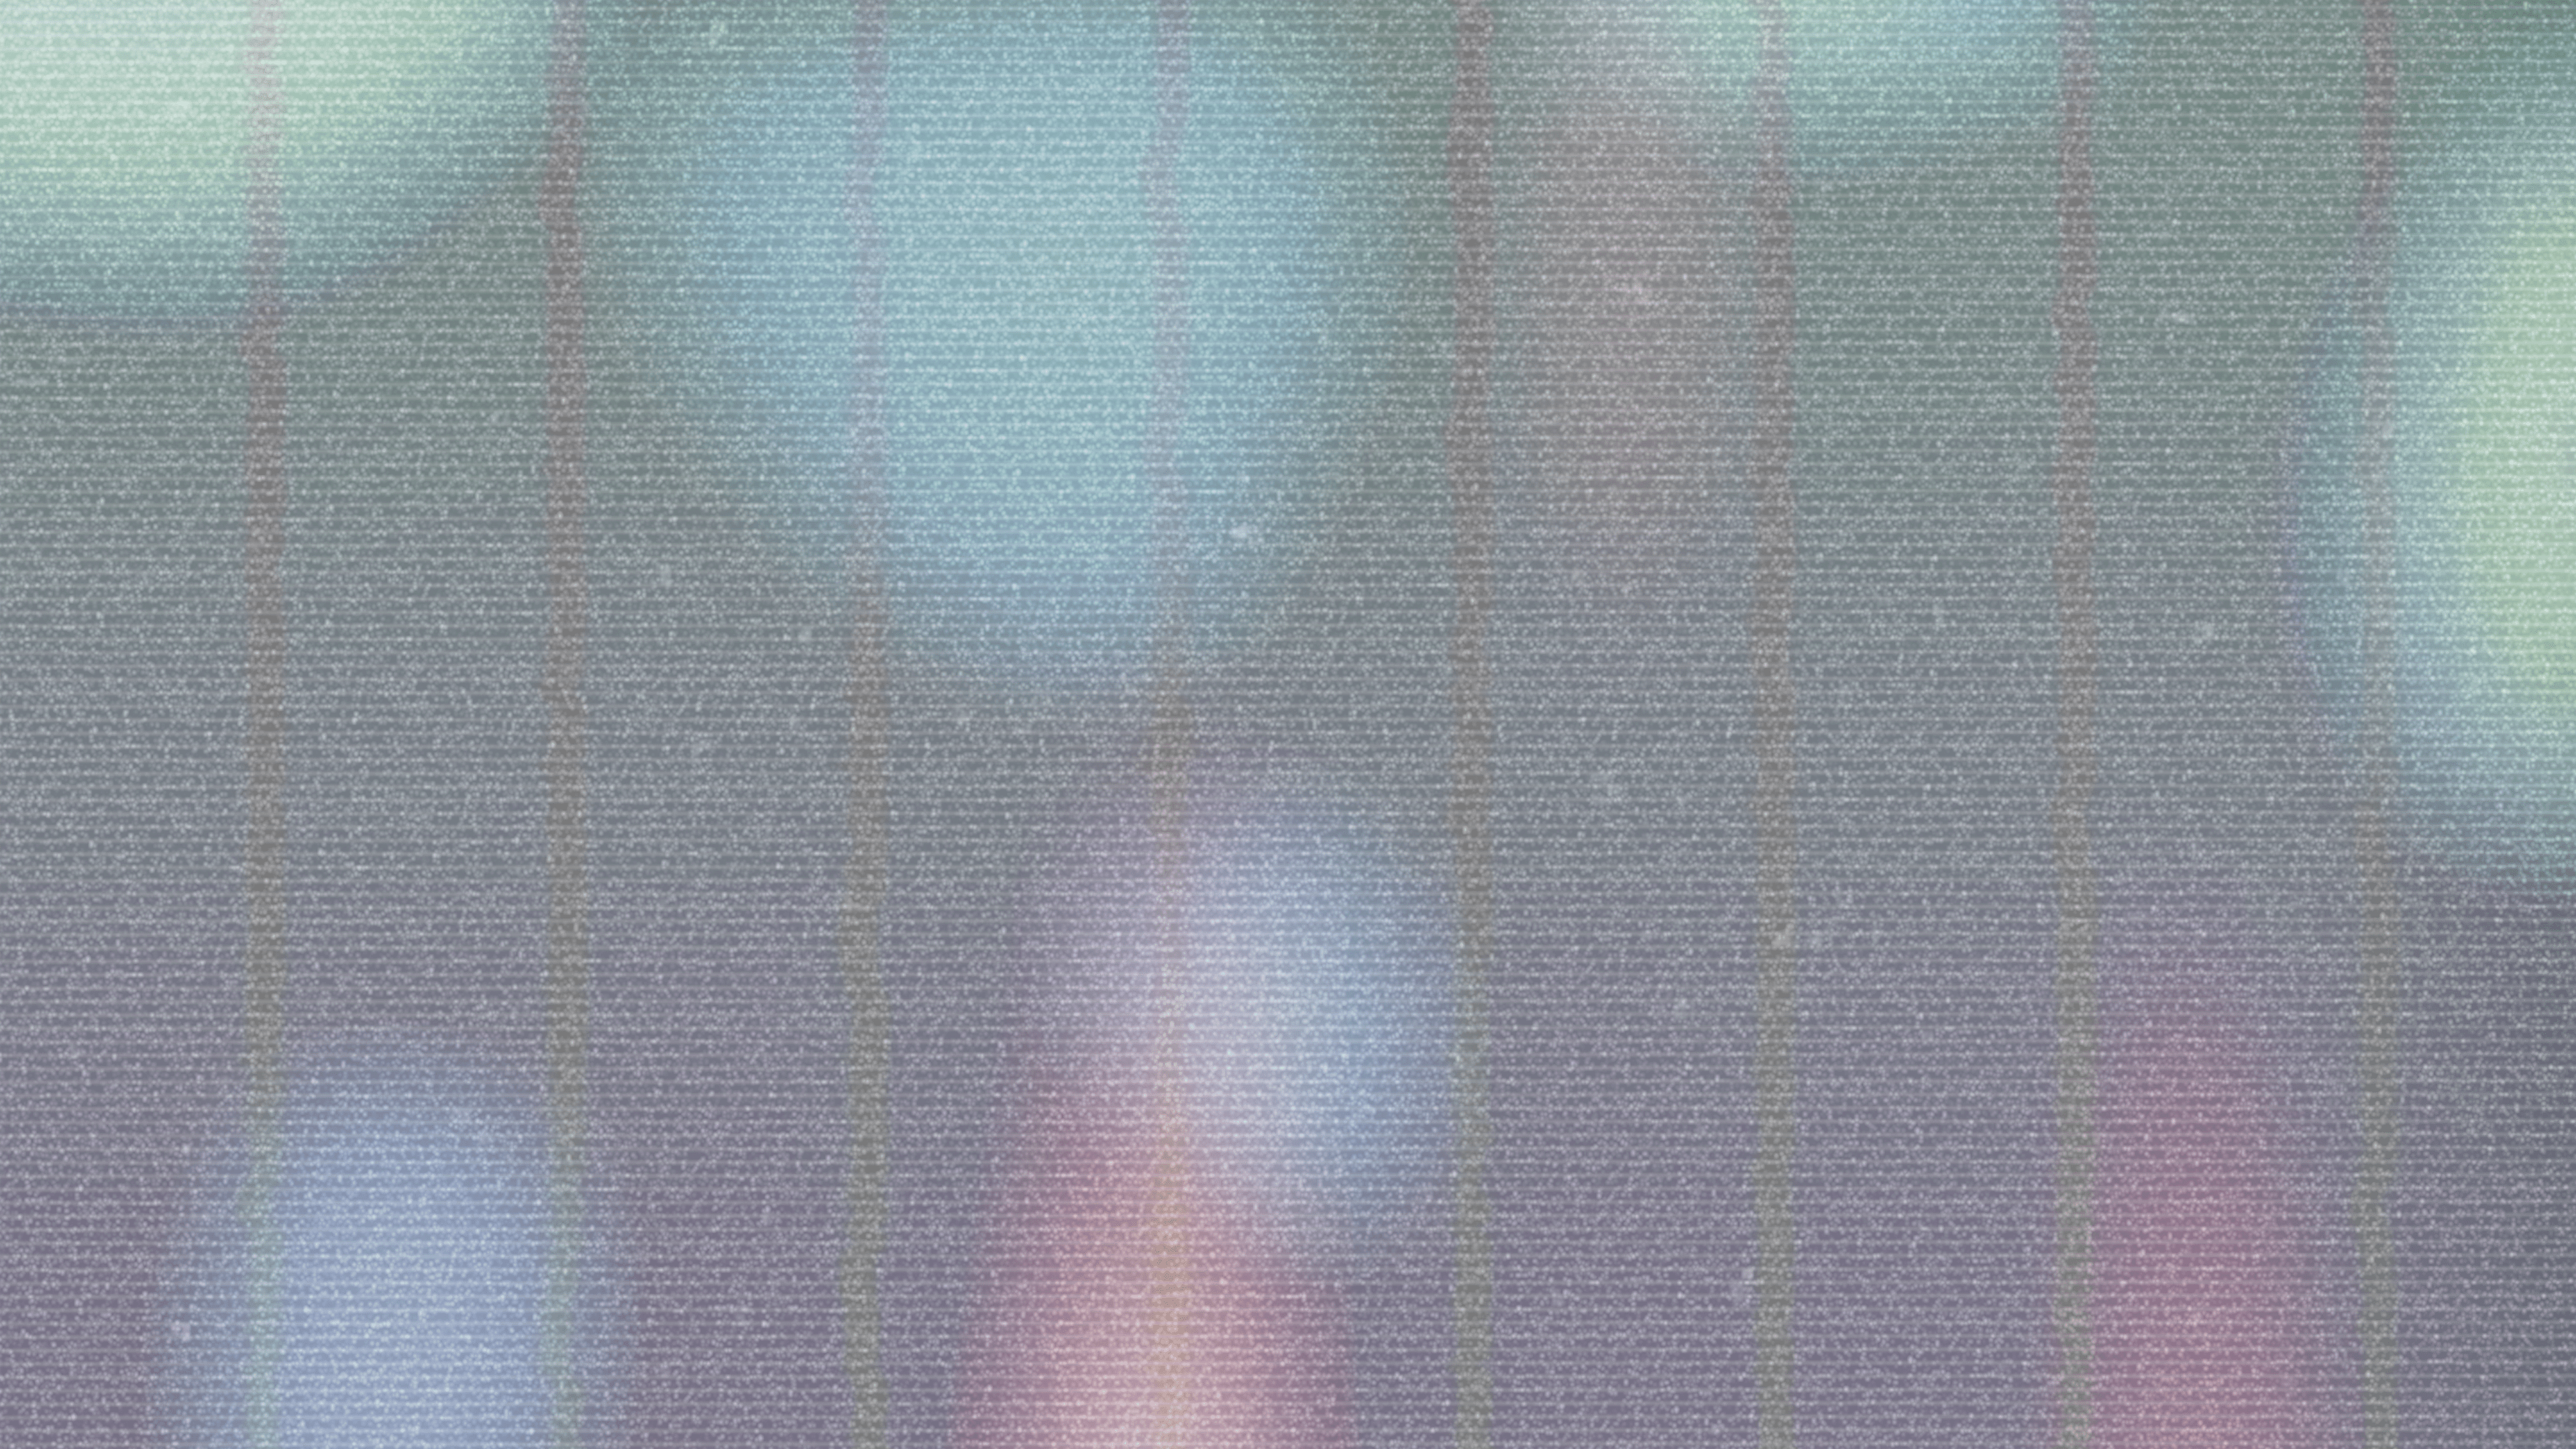 Textured Iridescent Fabric Background - Stock Motion Graphics